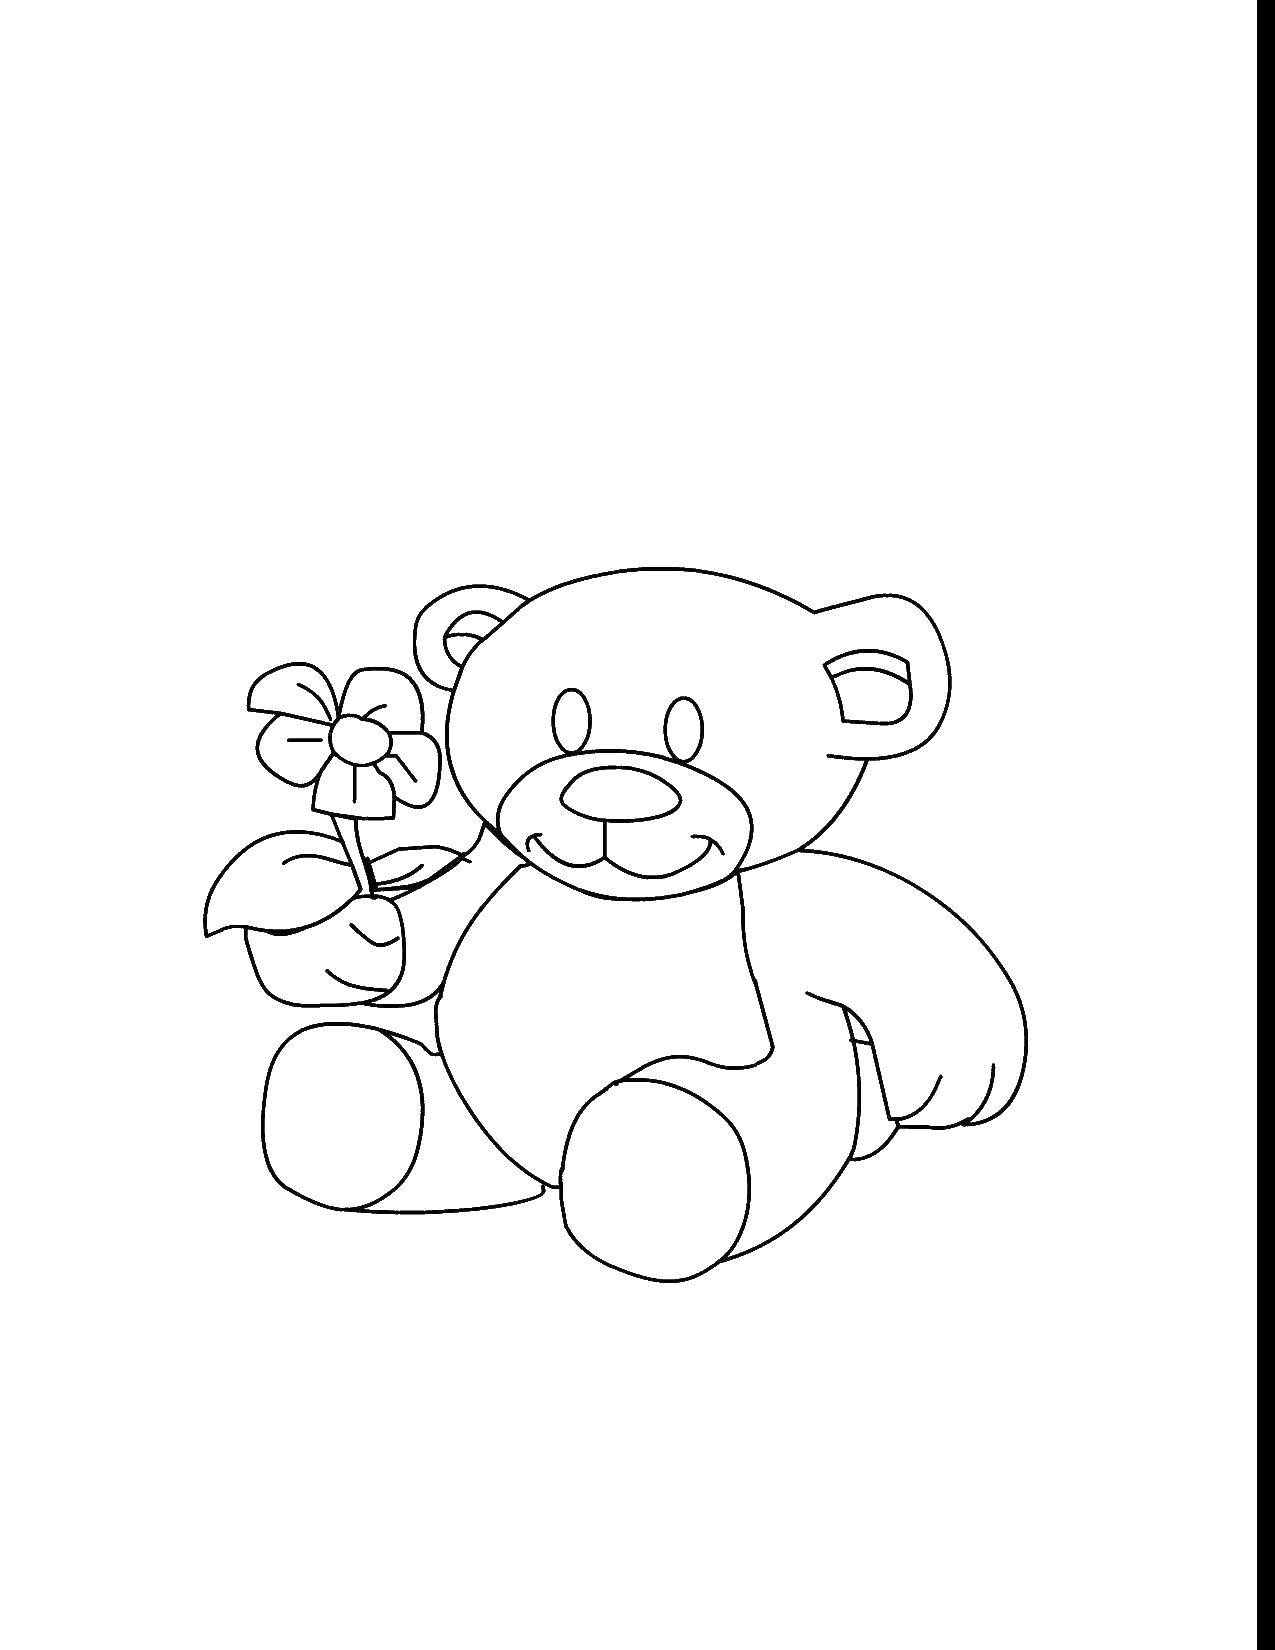 Название: Раскраска Мишка с цветочком. Категория: раскраски. Теги: Игрушка, медведь.